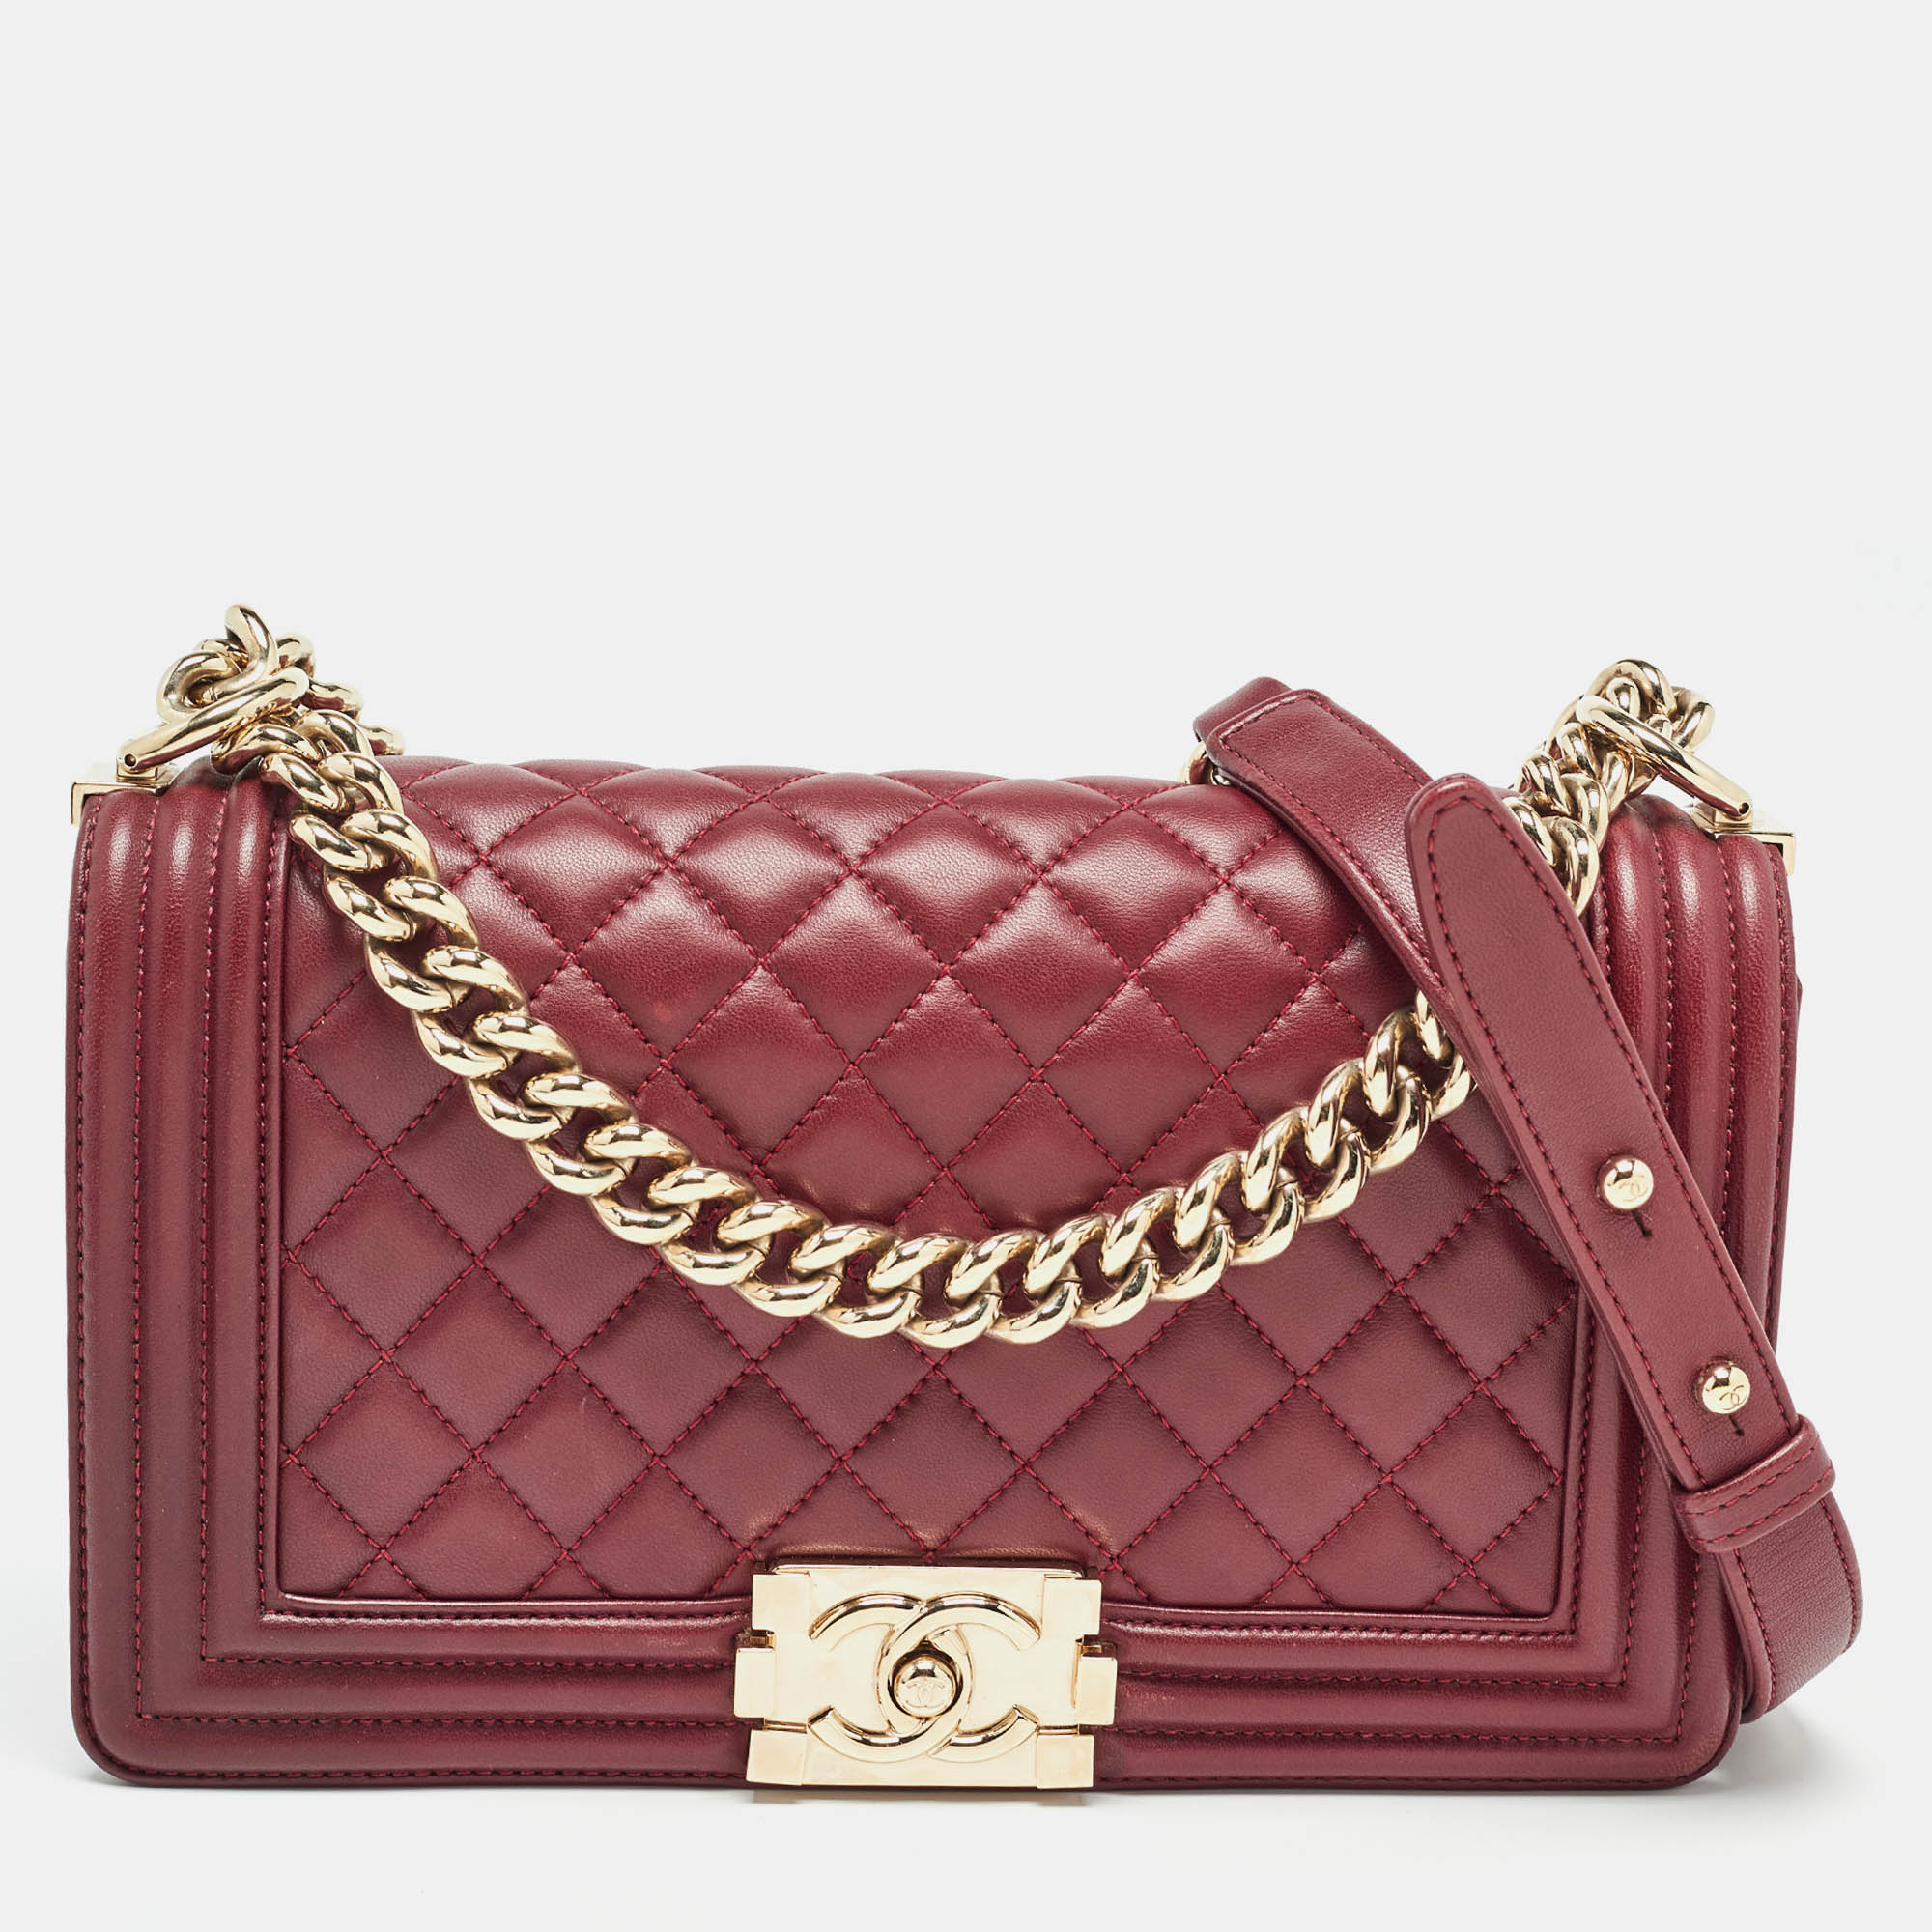 Chanel burgundy quilted leather medium boy bag